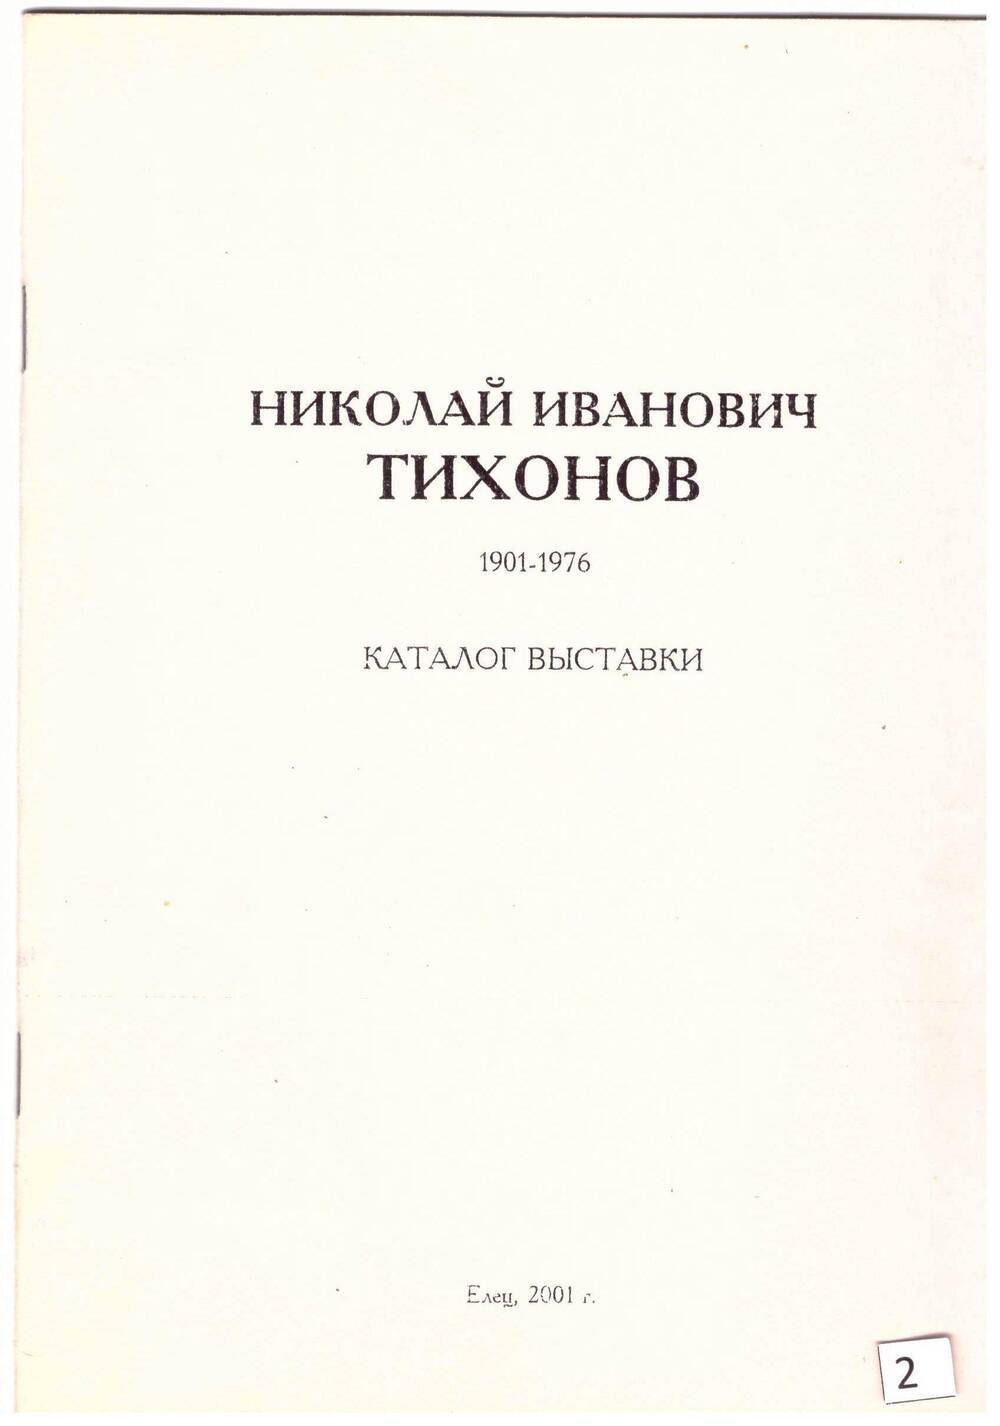 Каталог выставки работ Н. И. Тихонова, Елец, 2001